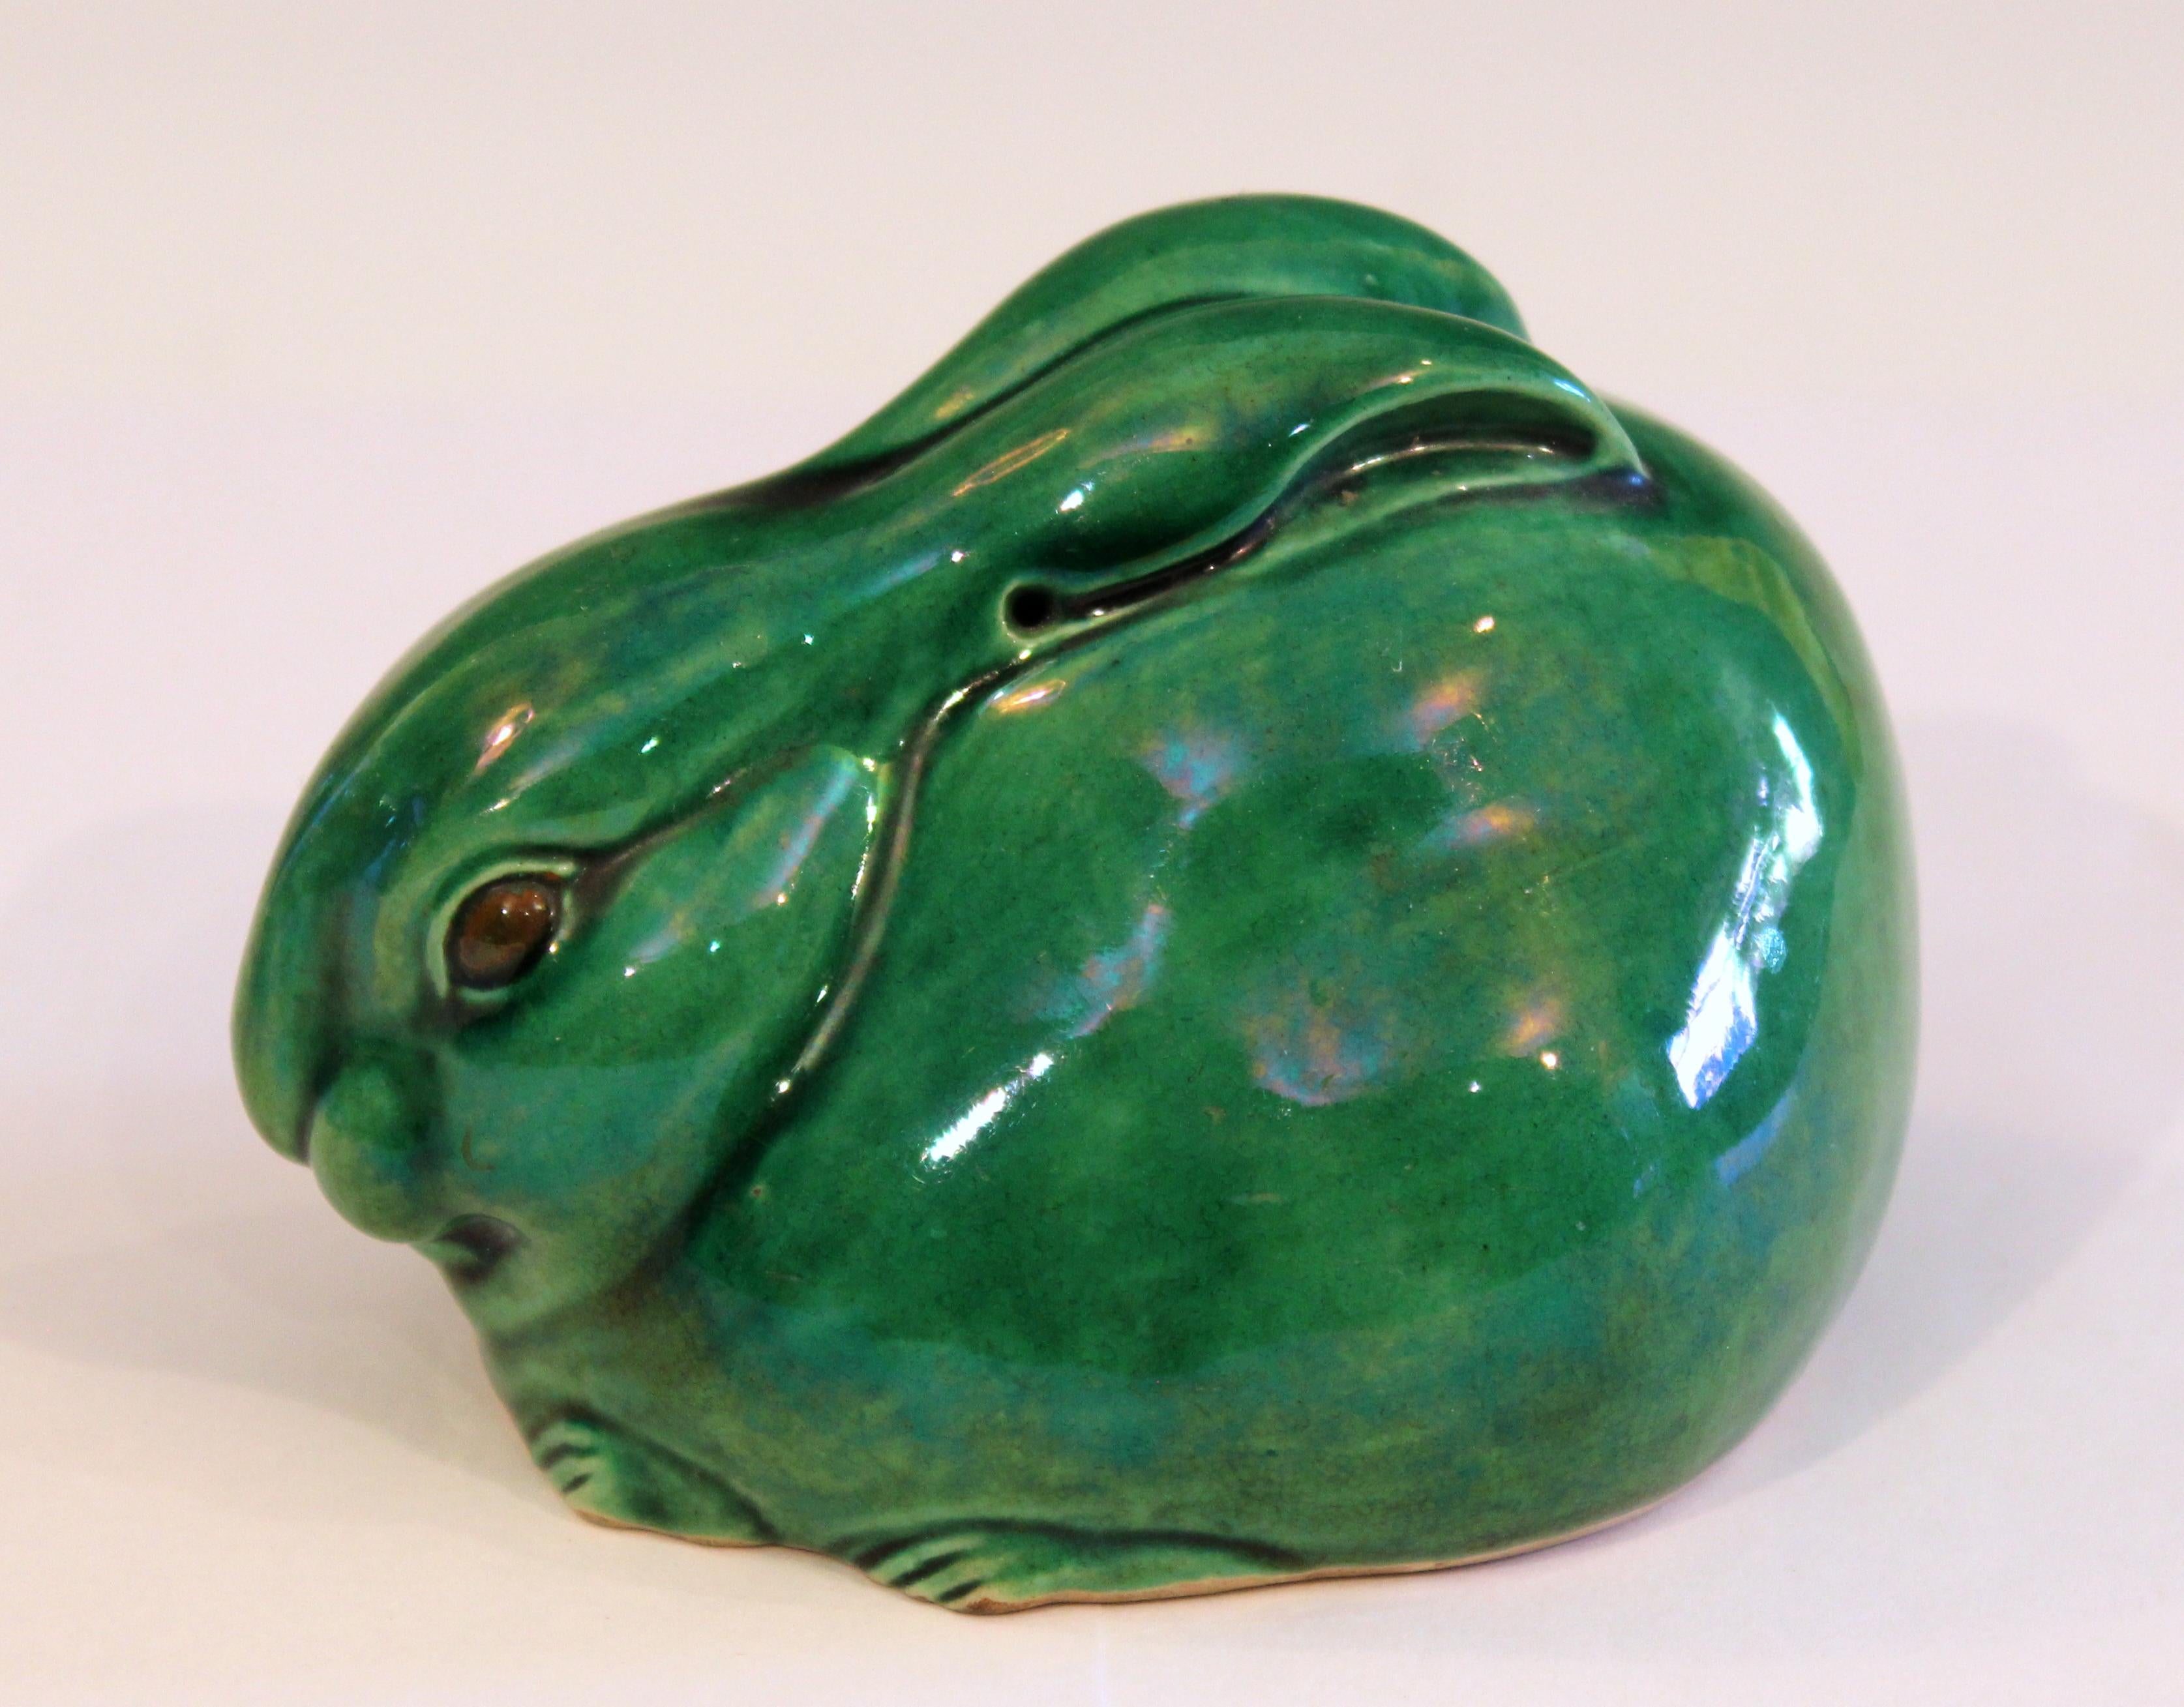 Antique Awaji pottery bunny rabbit figure in fine green crackle glaze, circa 1910s.Measures: 4